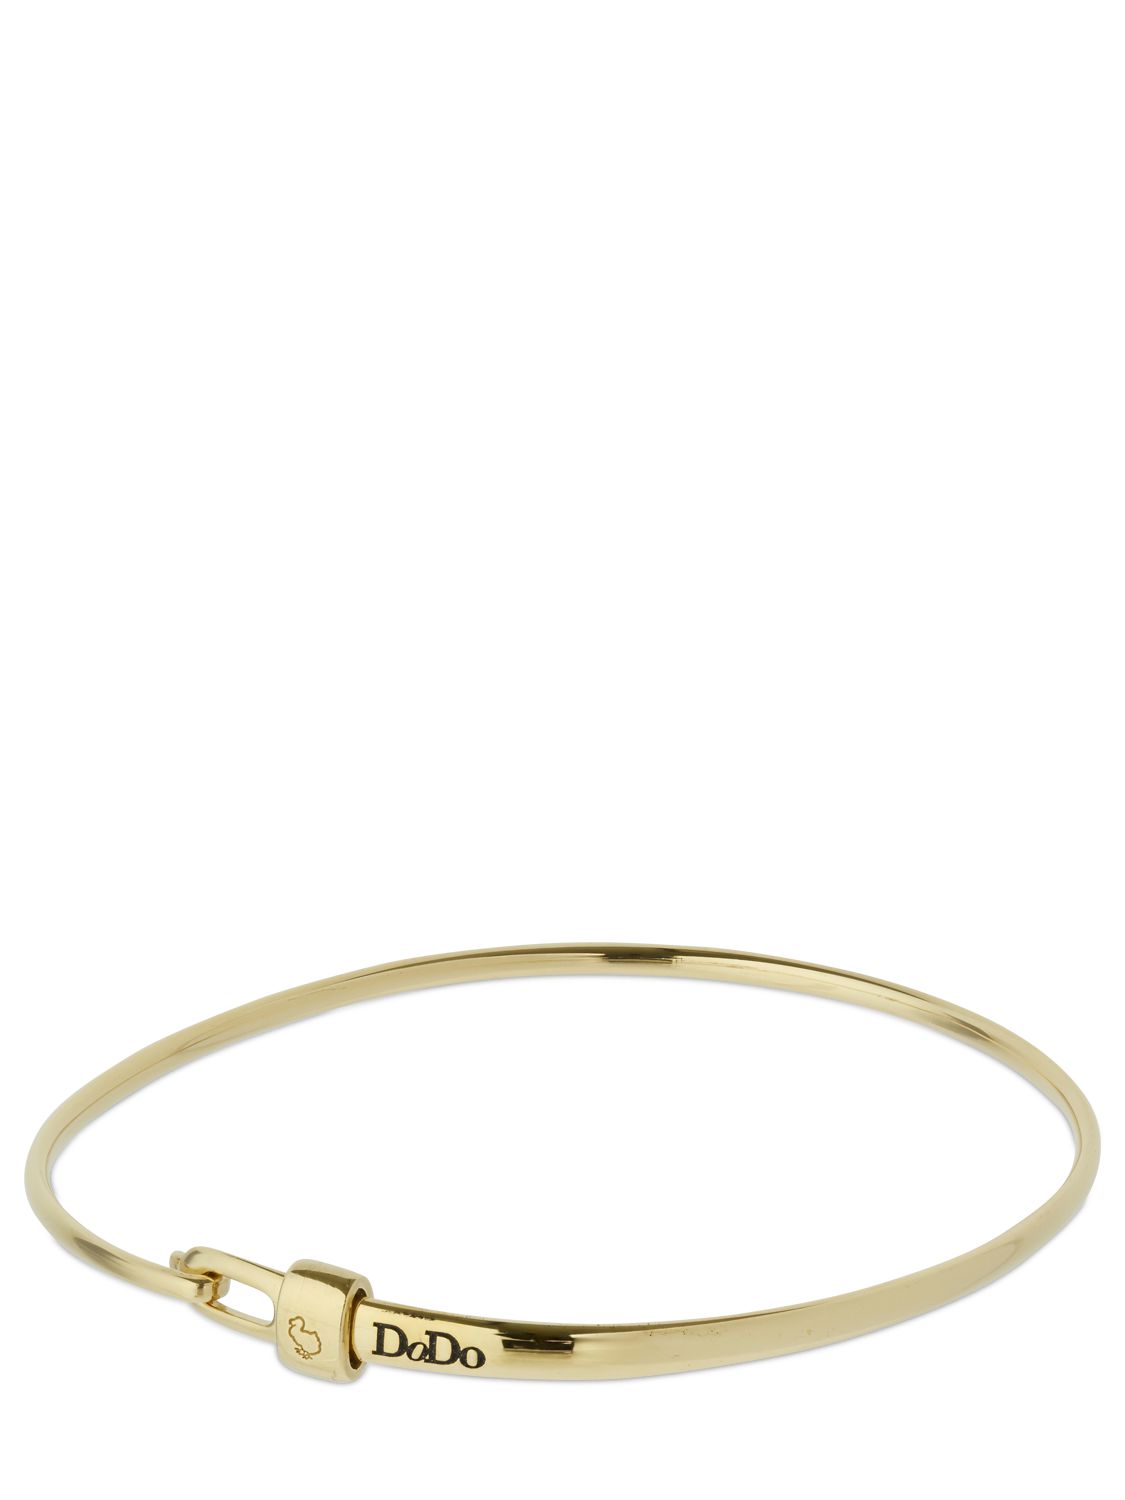 18kt Gold Dodo Bangle Bracelet